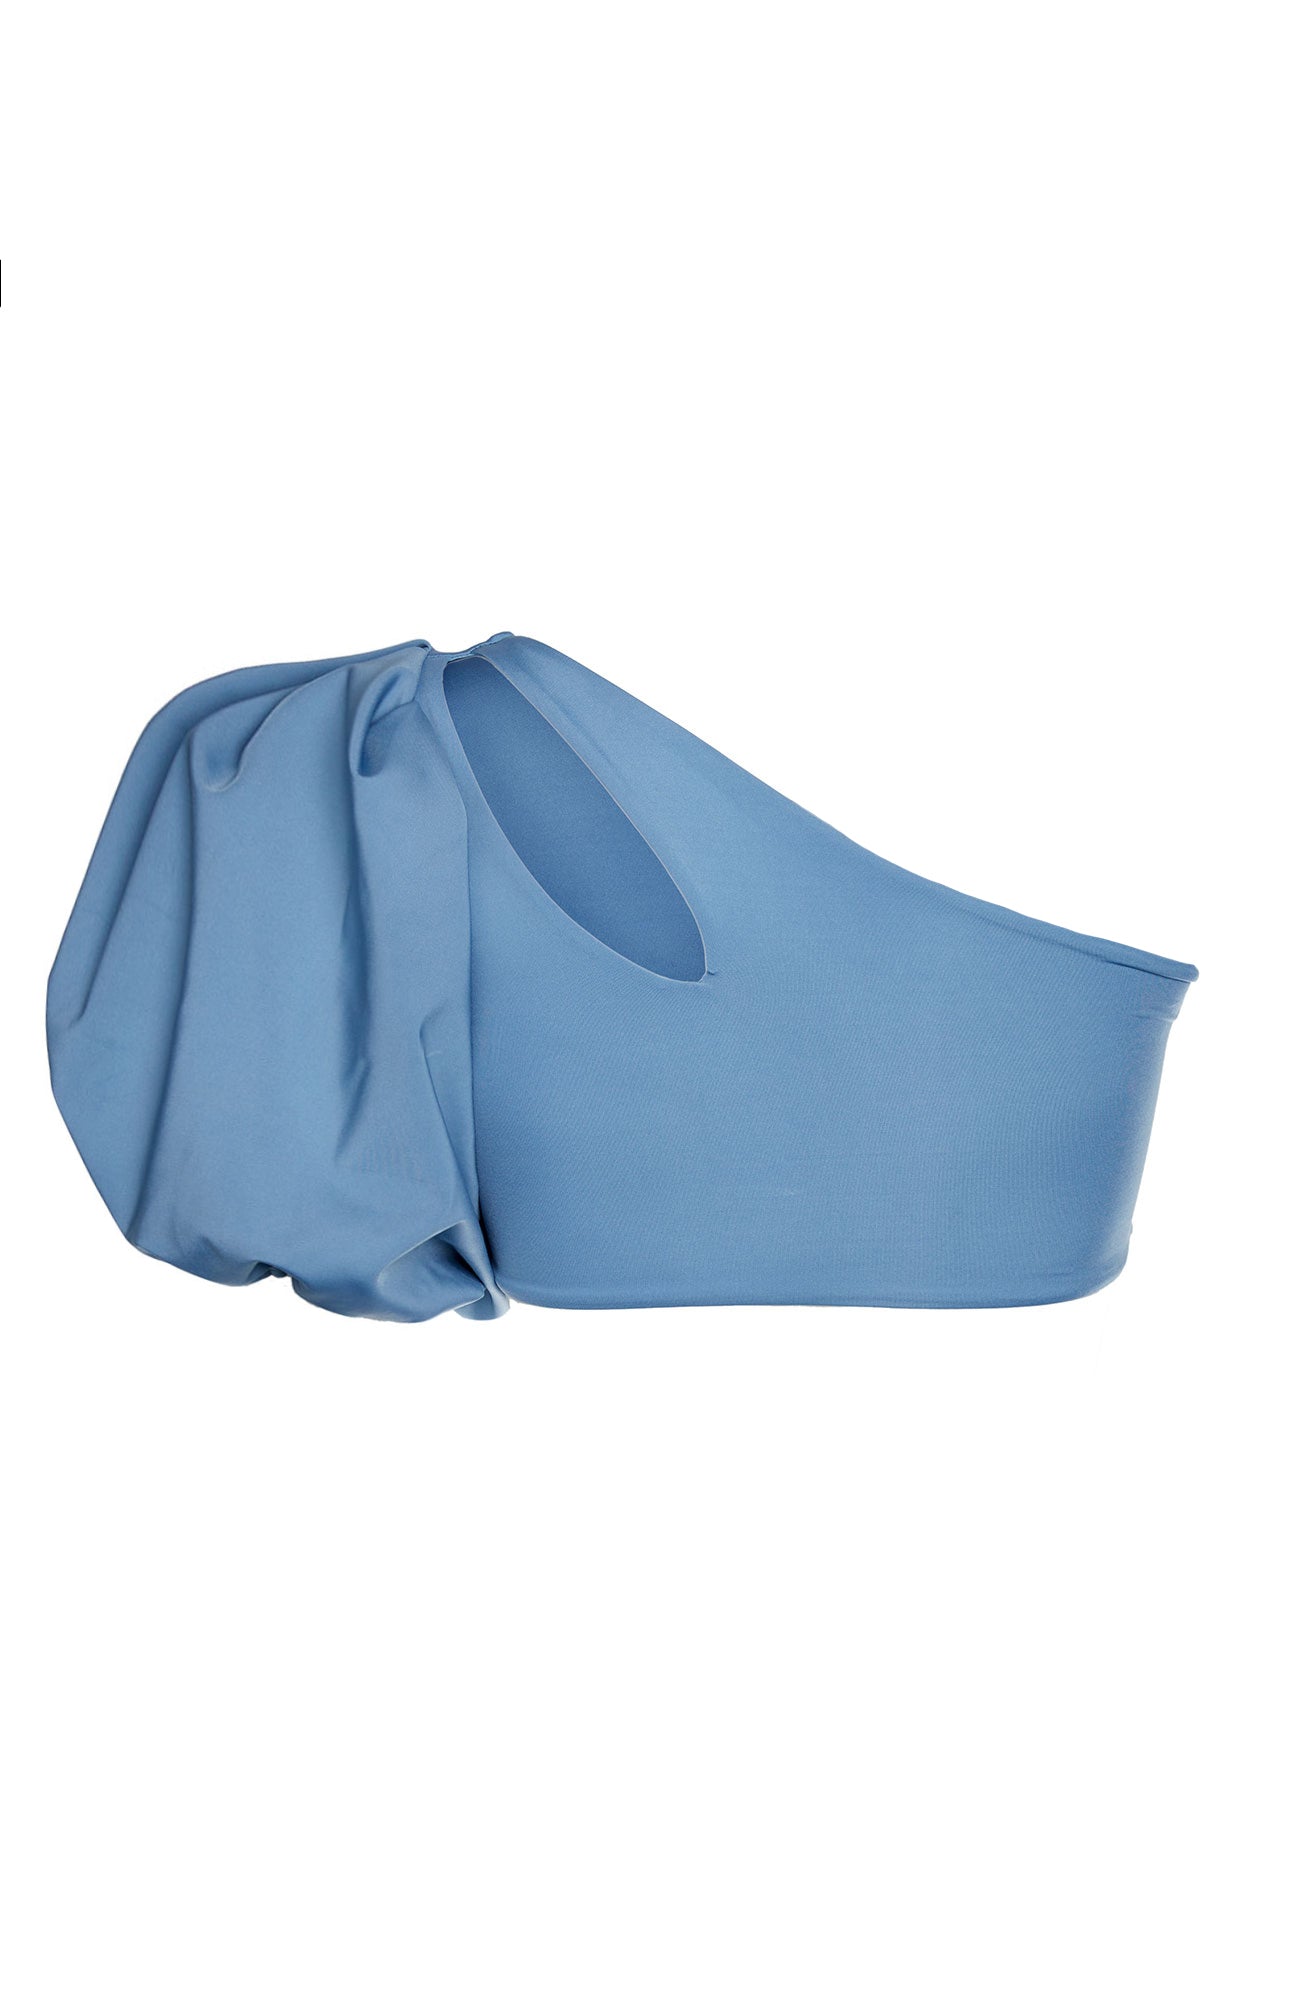 Eden Asymmetrical Puff Sleeve Bikini Top in Sky Blue by Sanlier